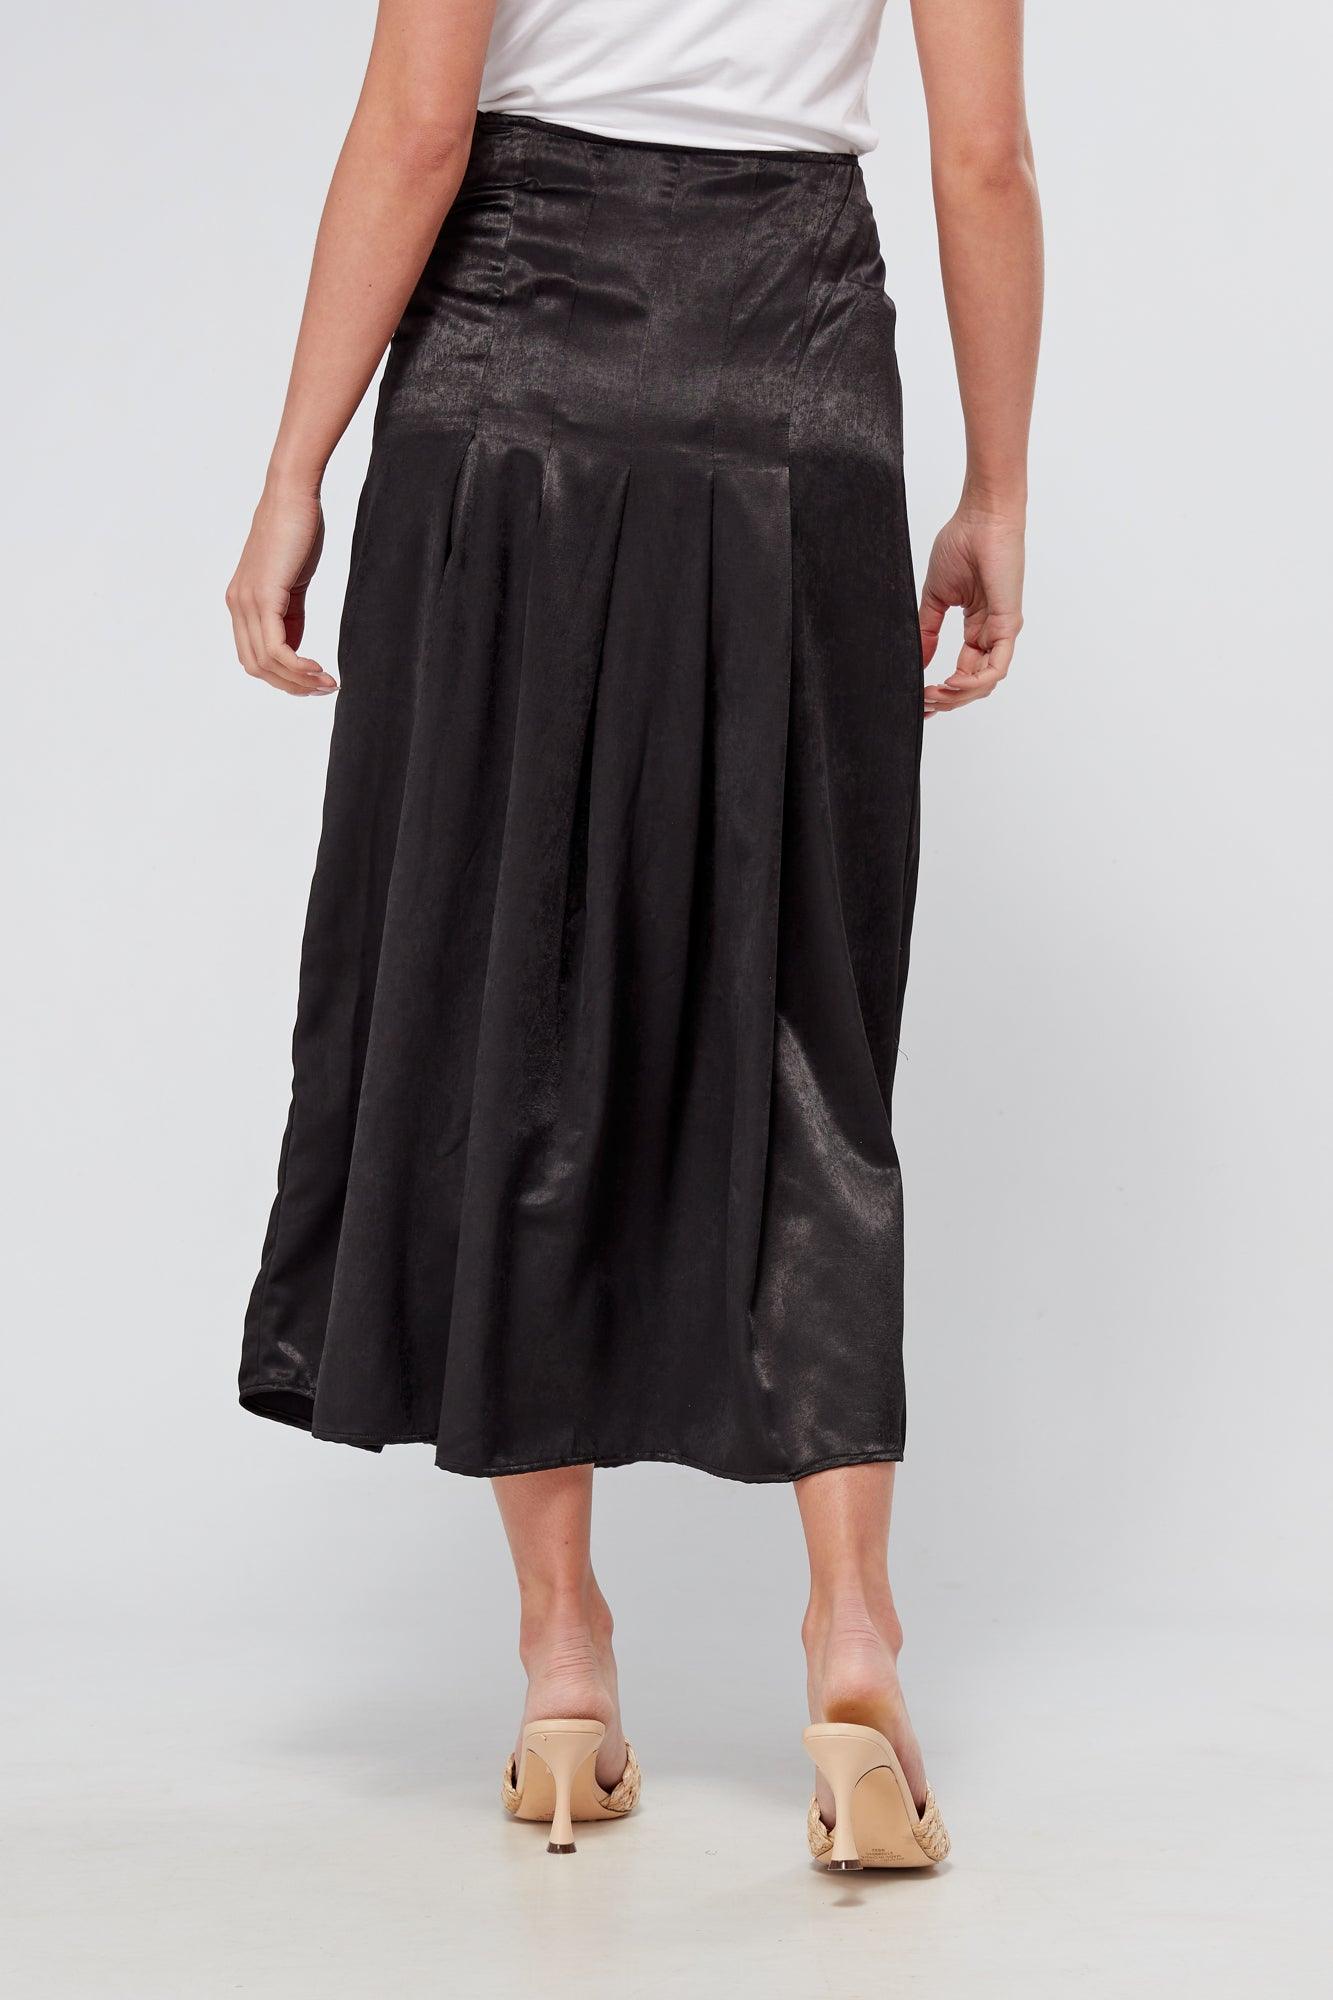 Delphine Black Pleated Skirt - TAHLIRA